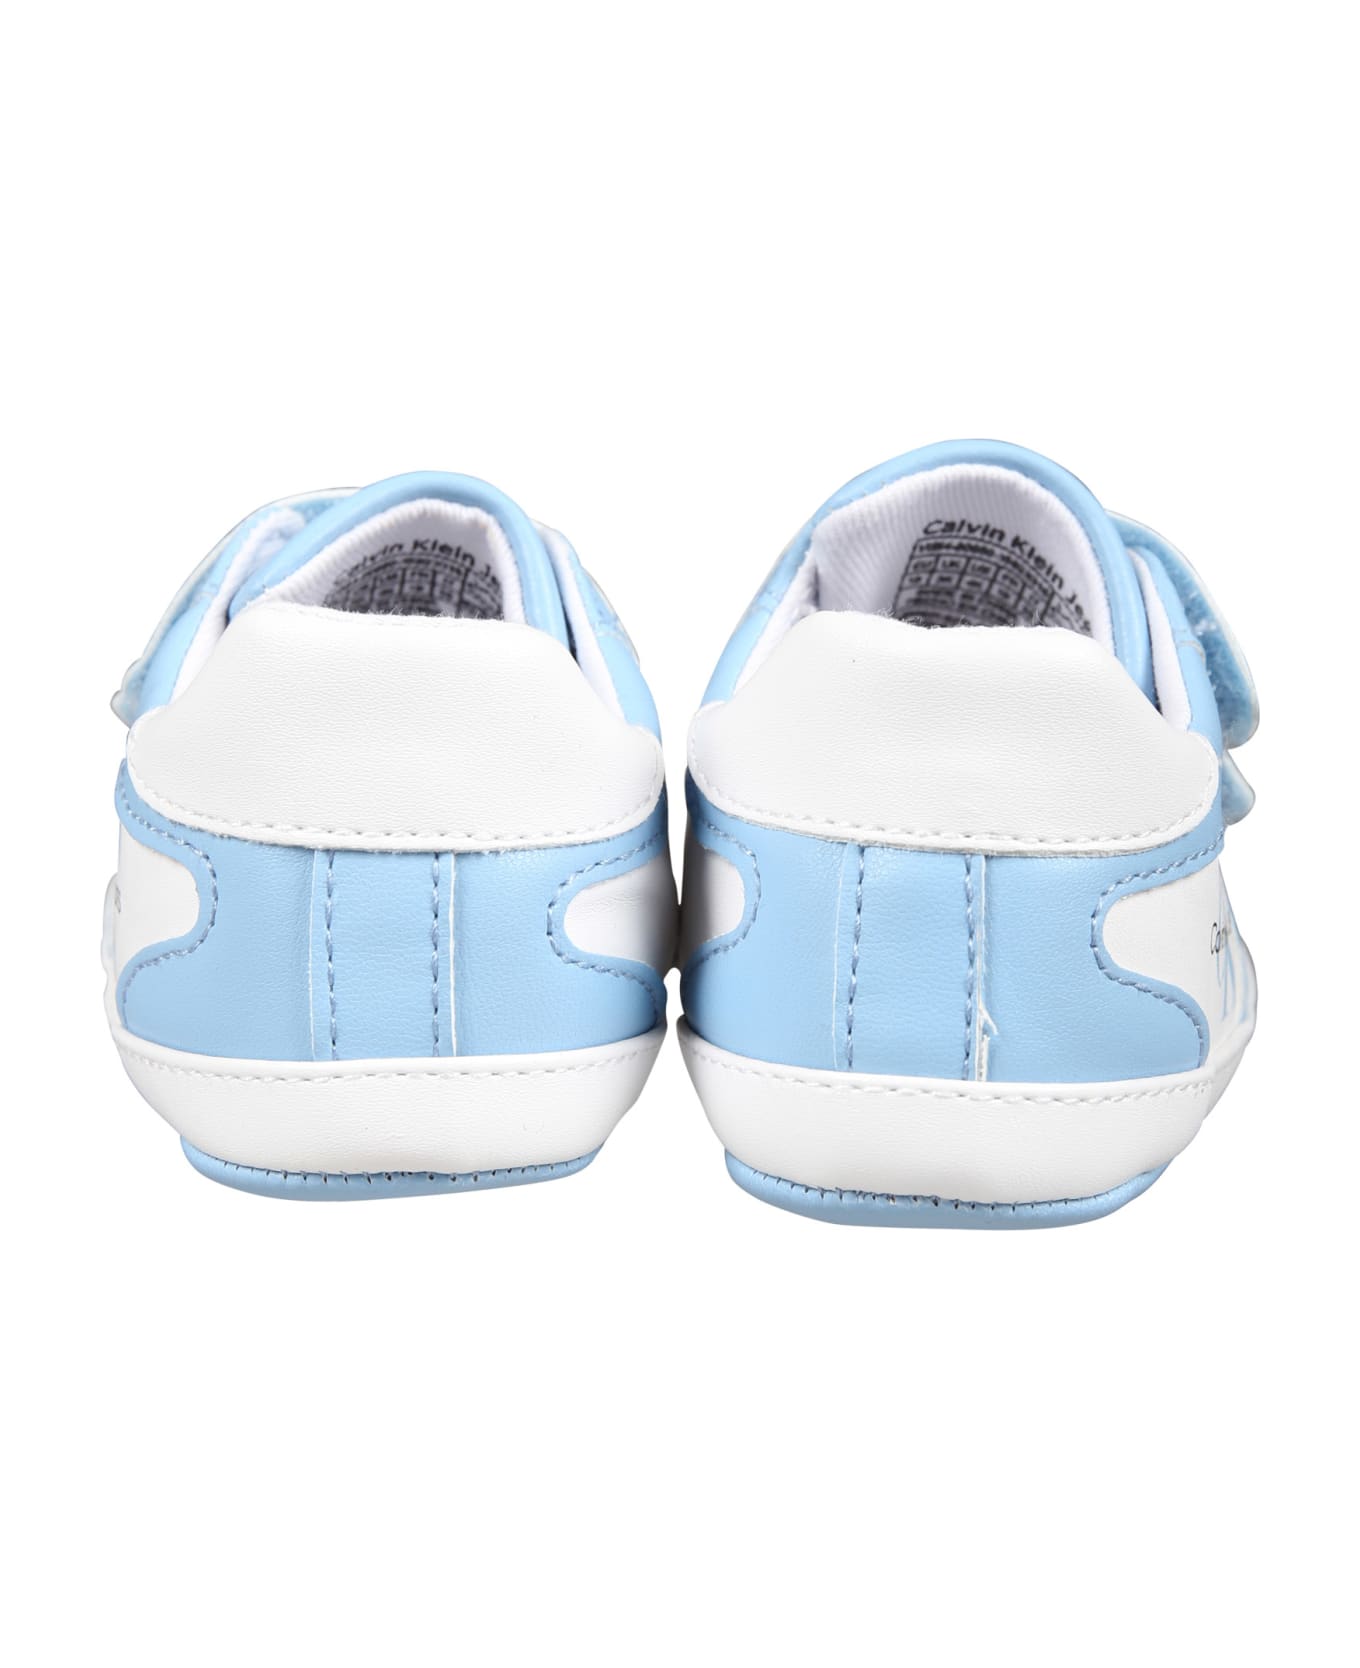 Calvin Klein Light Blue Sneakers For Baby Boy With Logo - Light Blue シューズ